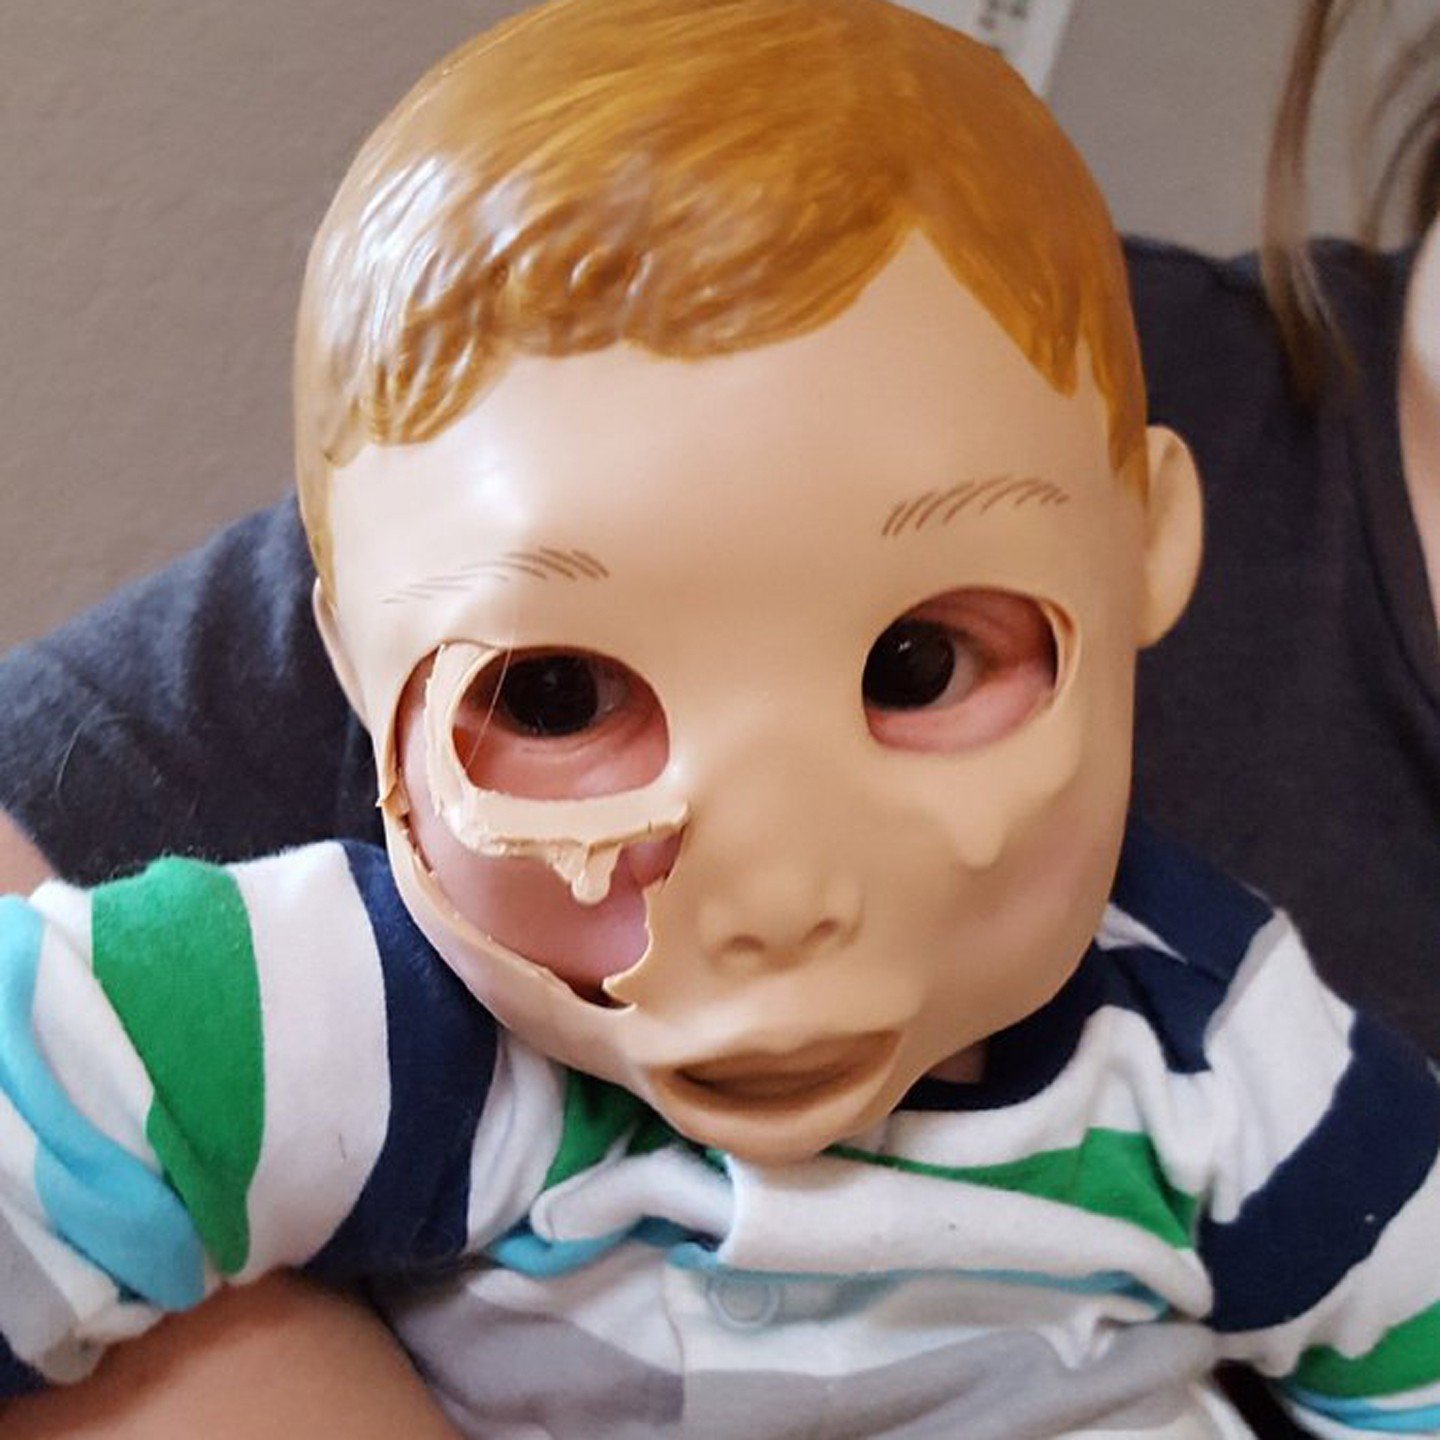 Viral Tweet About Little Girl Cutting Faces Off Dolls | POPSUGAR Moms